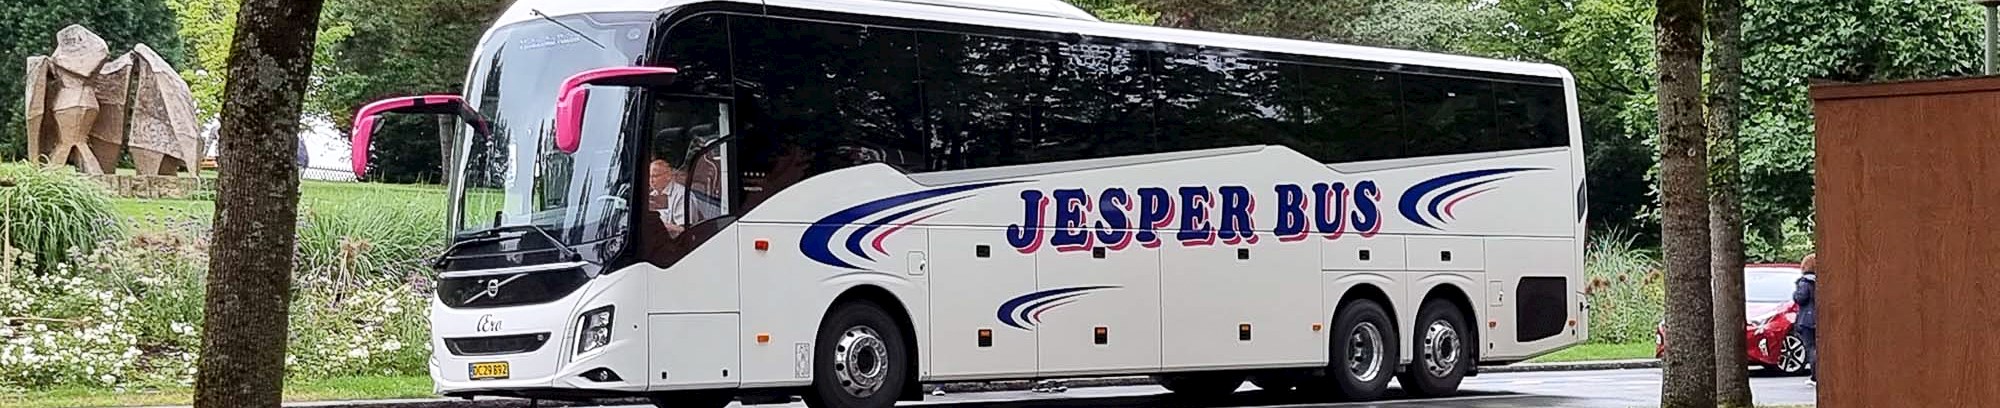 Jesper Bus' bus